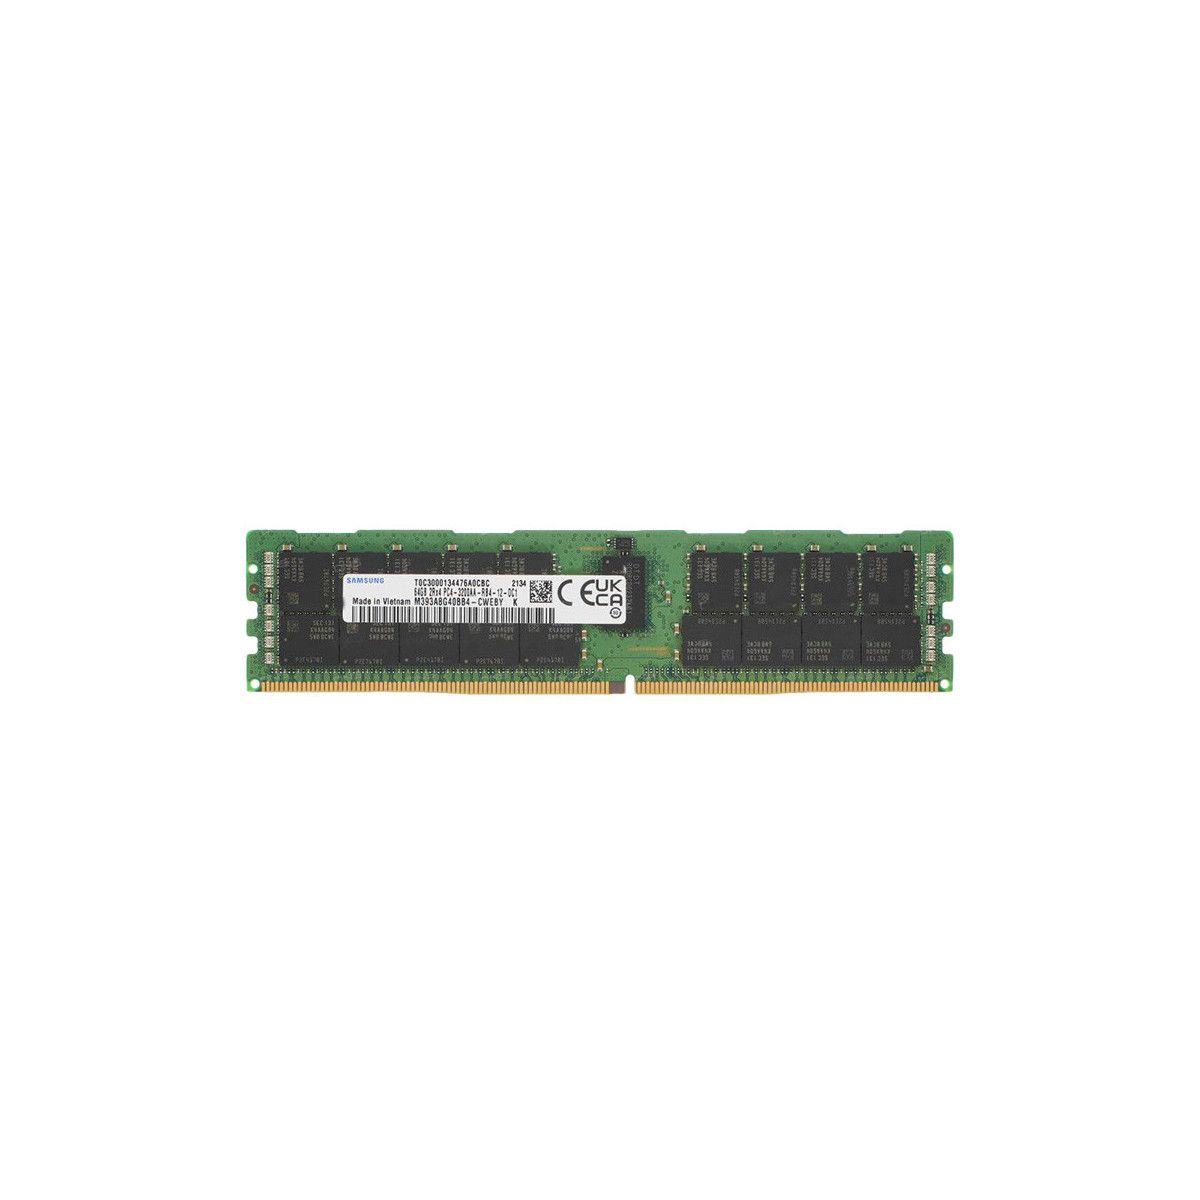 P2MYX-MS - Memstar 1x 64GB DDR4-3200 RDIMM PC4-25600R - Mem-Star OEM compatibile Memoria 1 - Memstar 